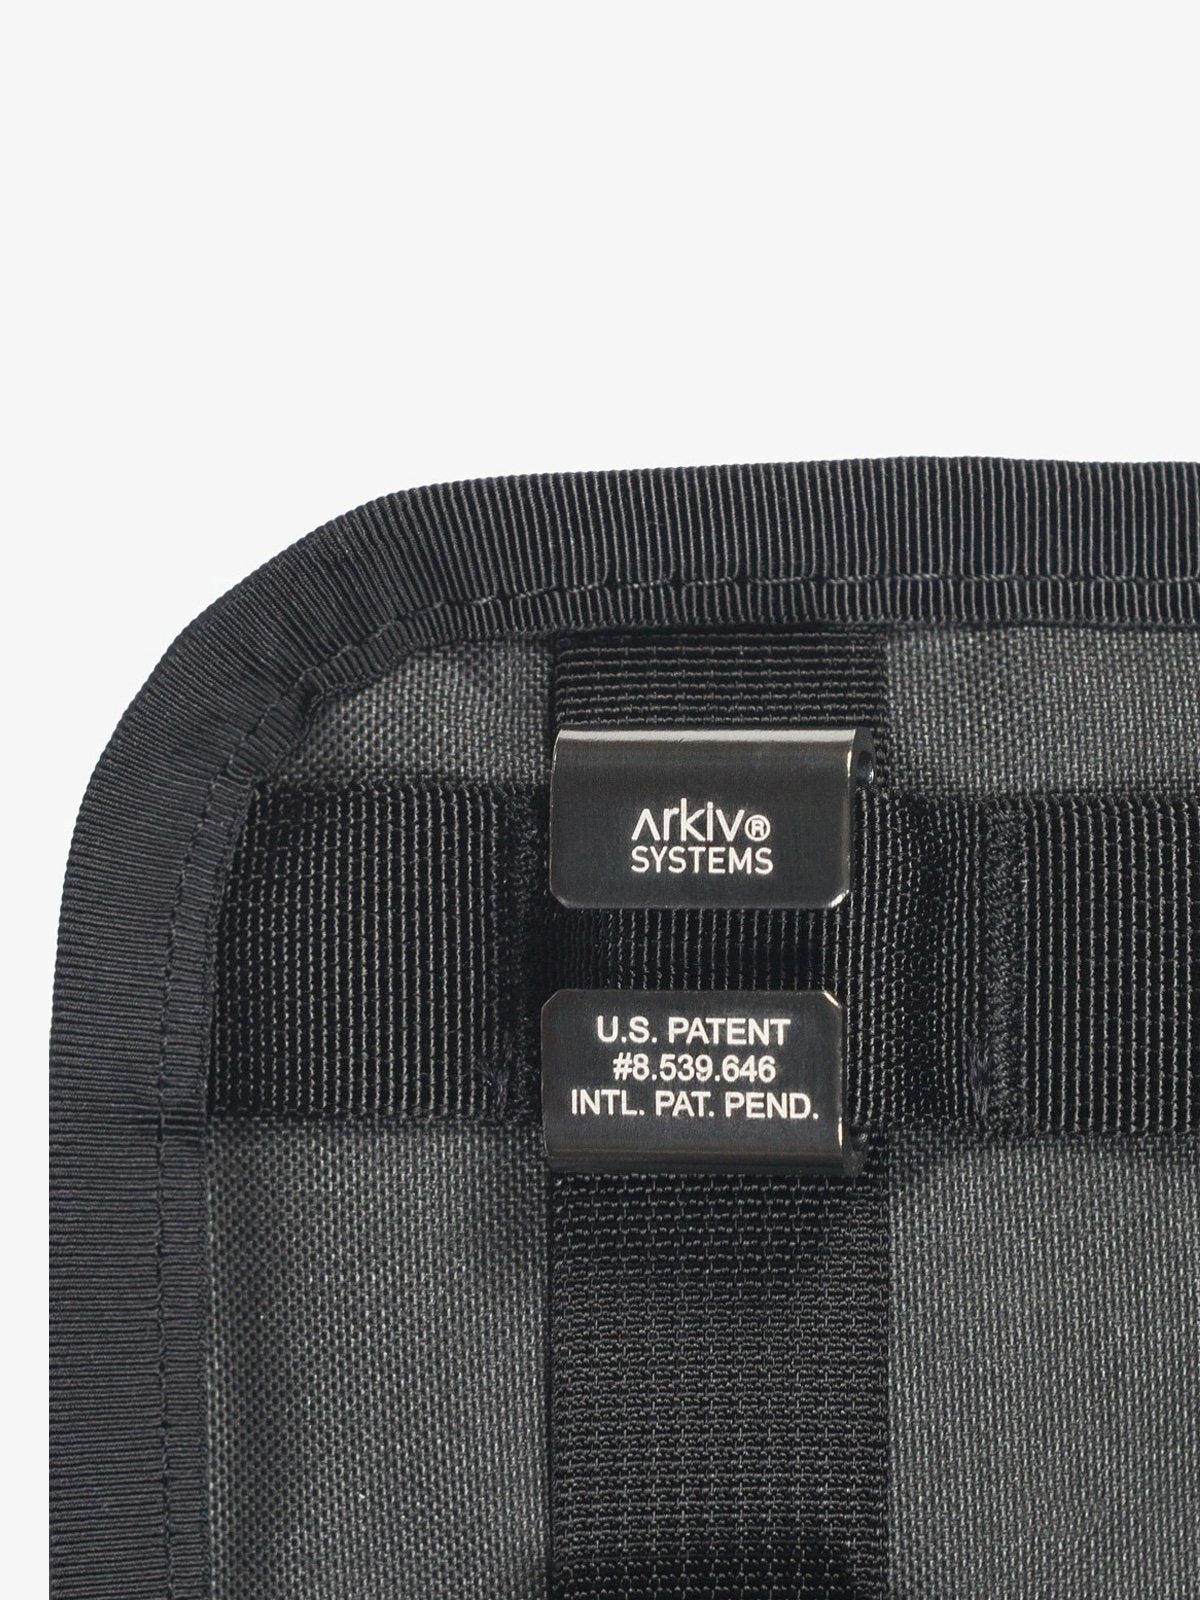 Arkiv Tool Pocket by Mission Workshop - Weatherproof Bags & Technical Apparel - San Francisco & Los Angeles - Built to endure - Guaranteed forever